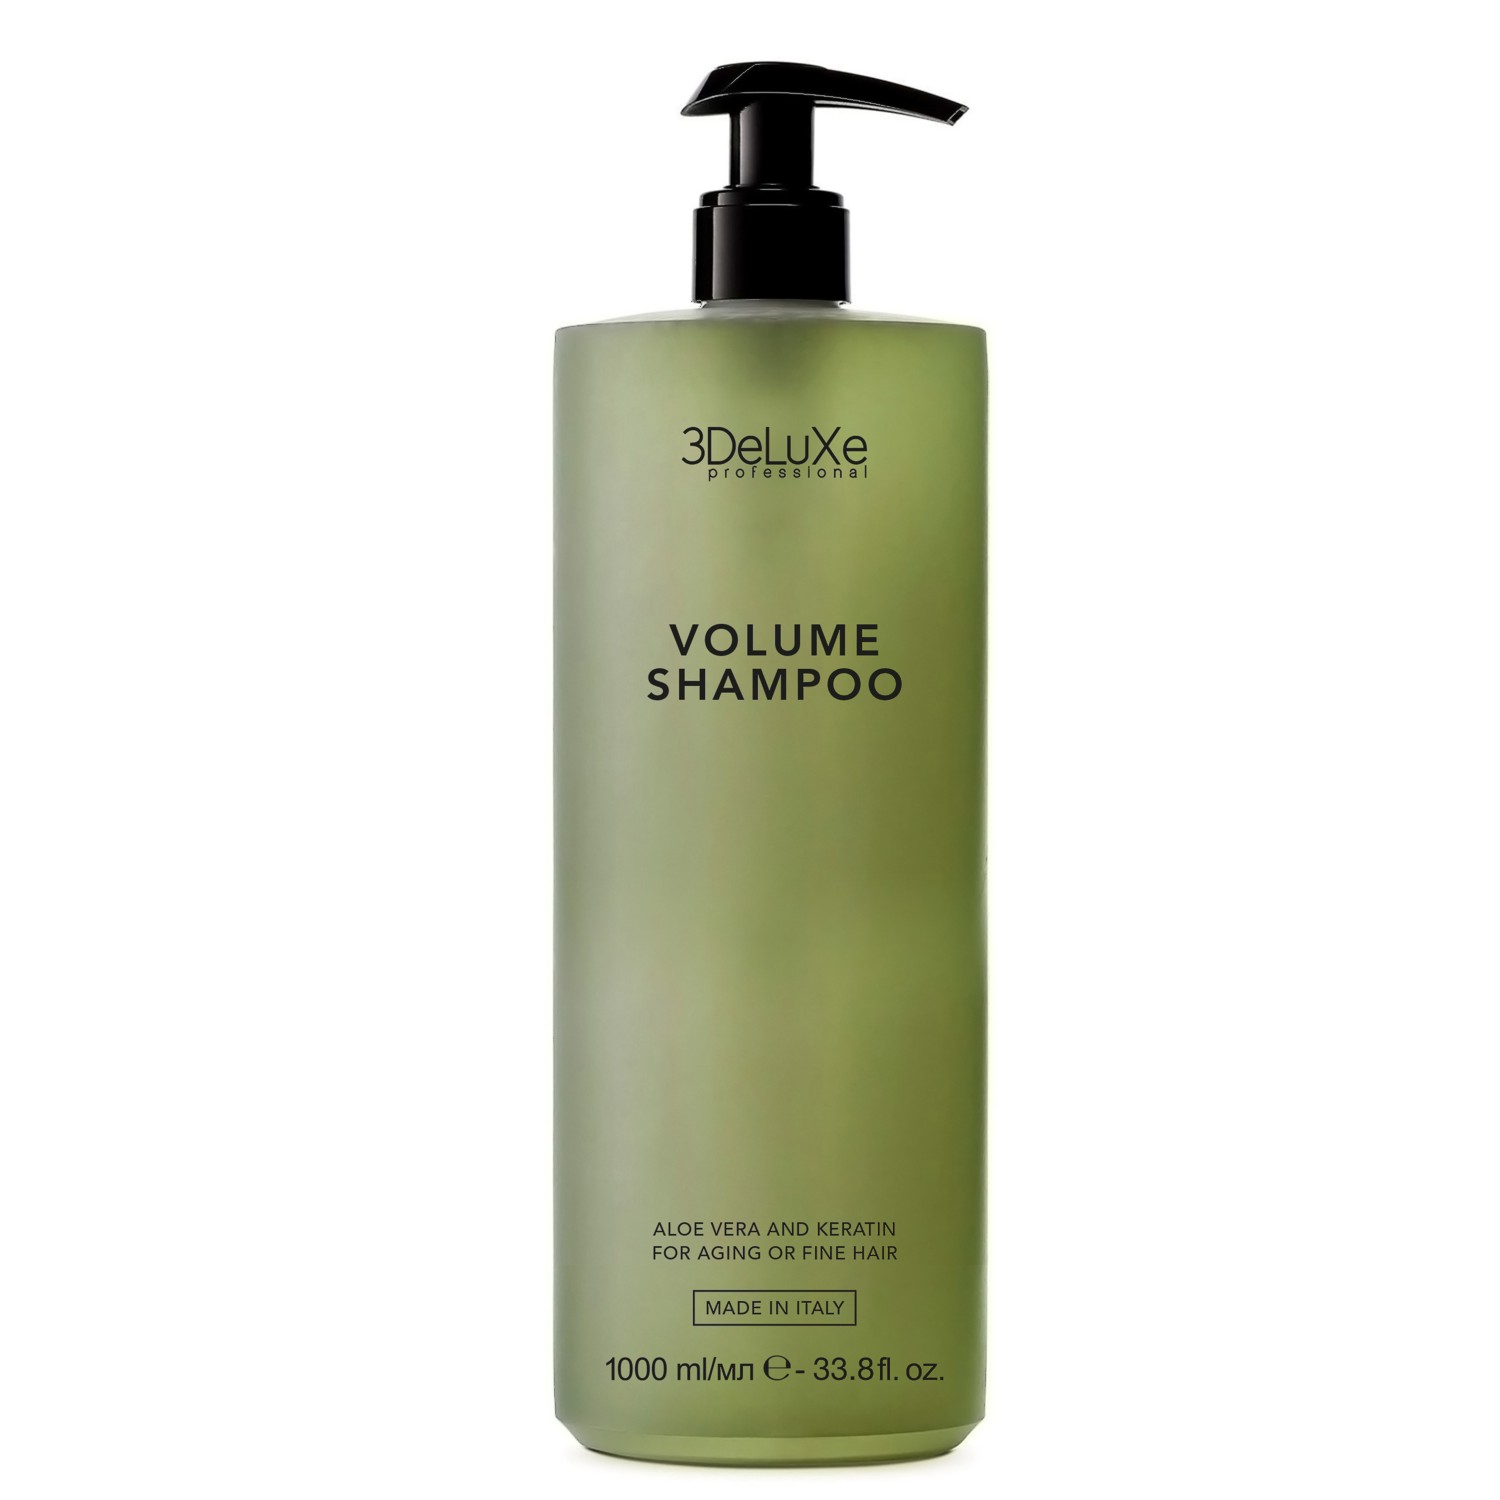 3DeLuXe Professional VOLUME Shampoo 1 L